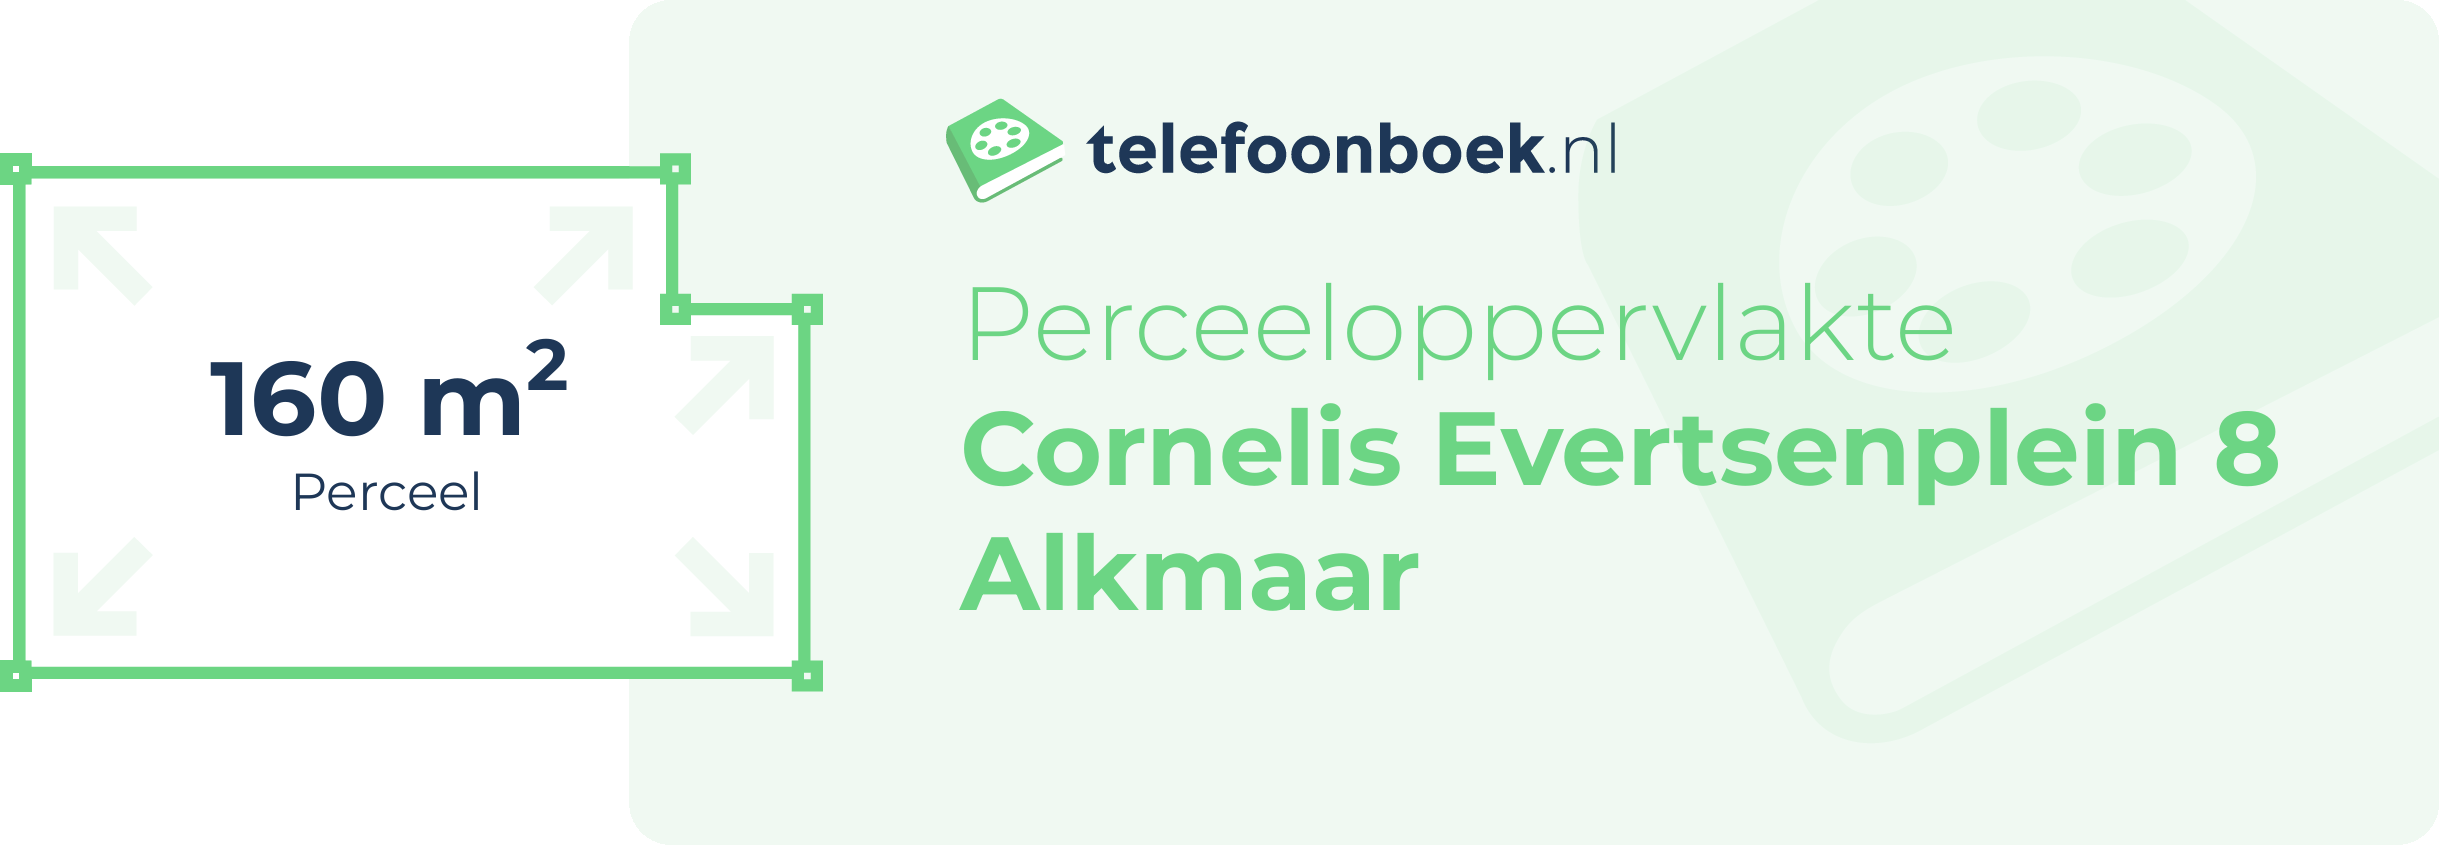 Perceeloppervlakte Cornelis Evertsenplein 8 Alkmaar